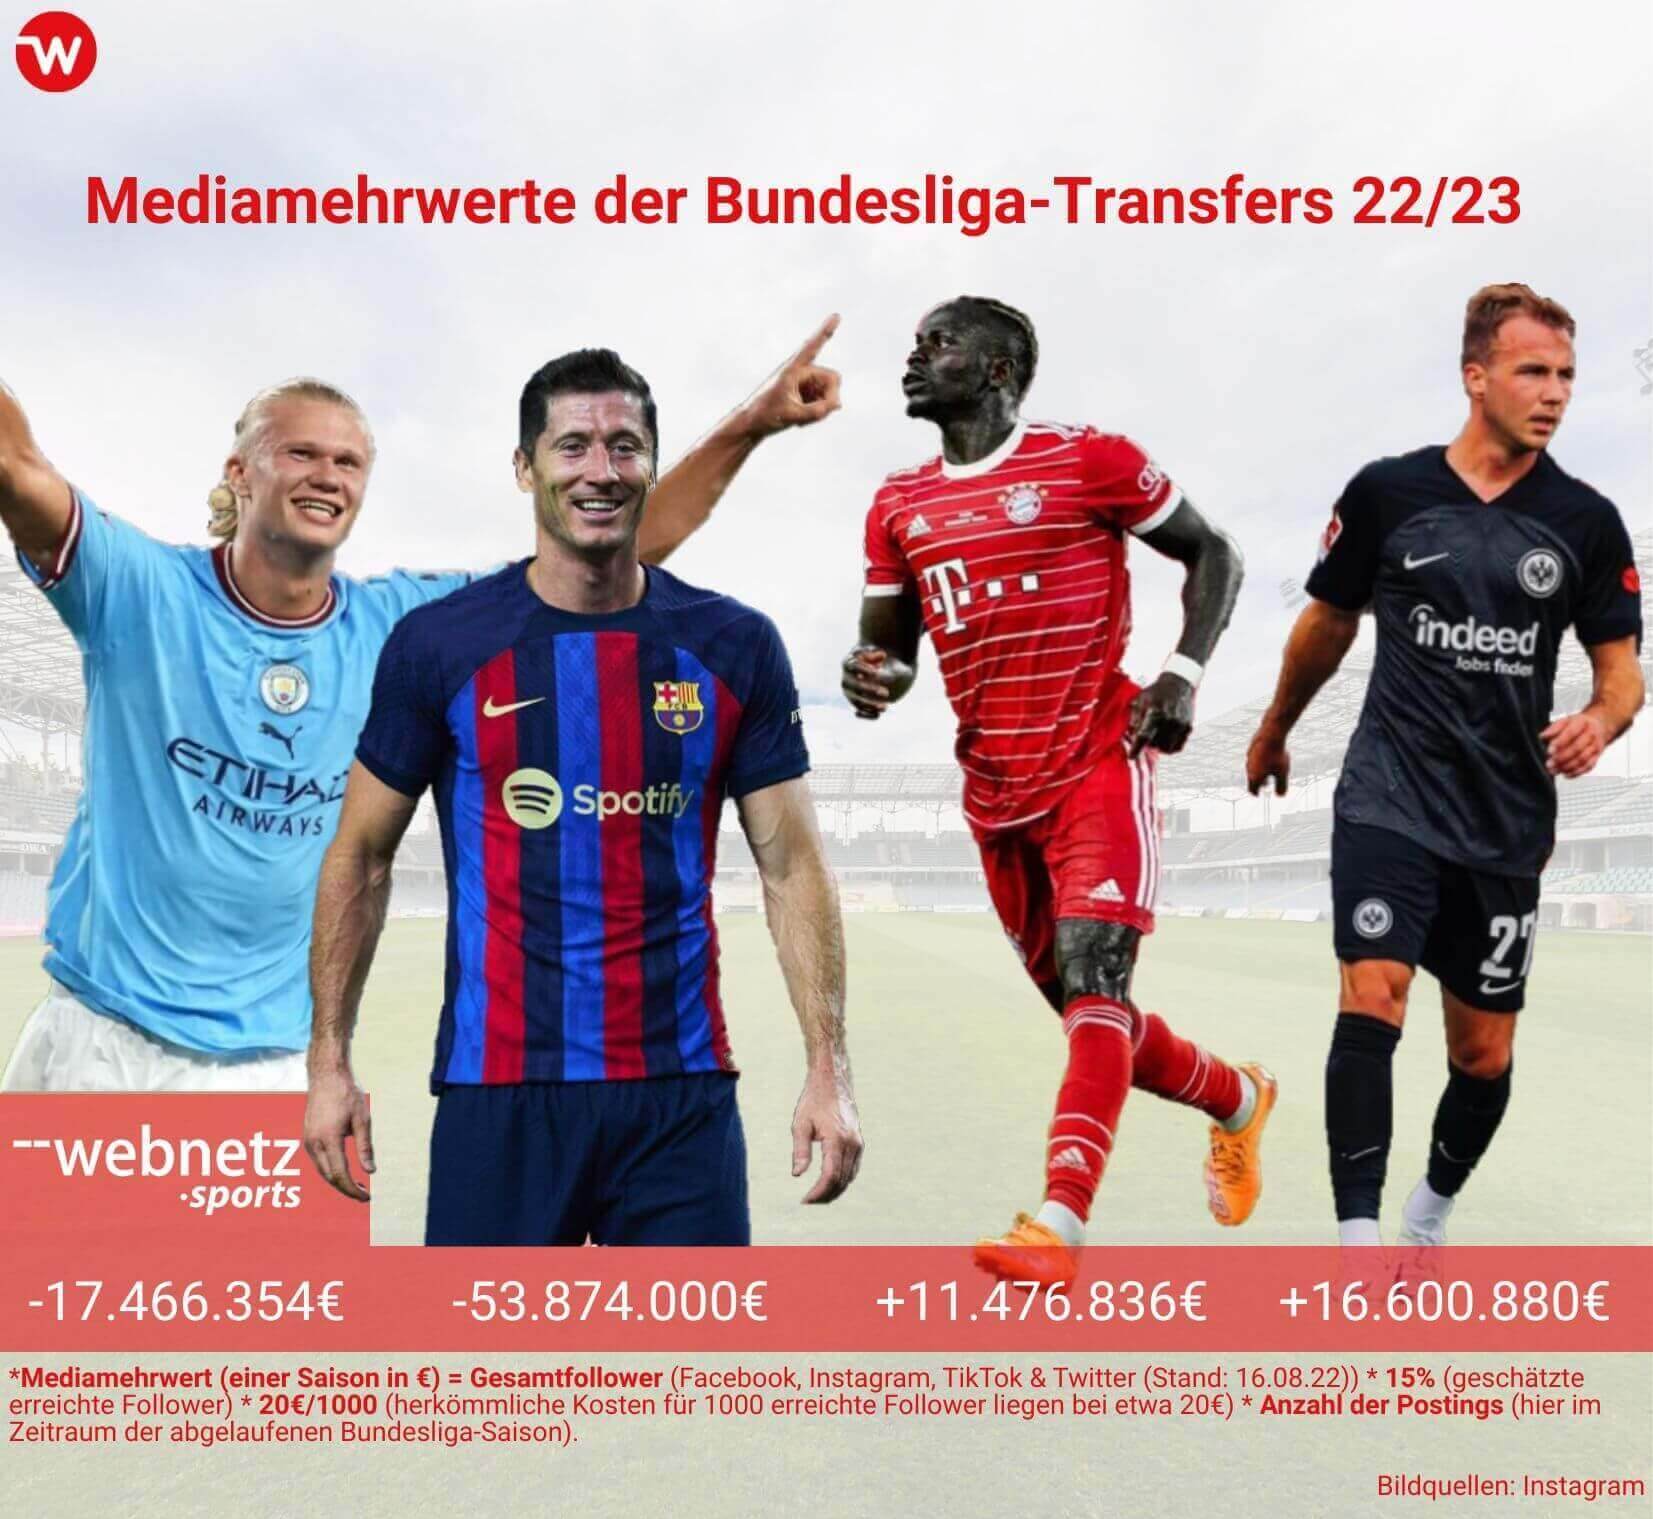 Mediamehrwerte der Bundesliga-Transfers